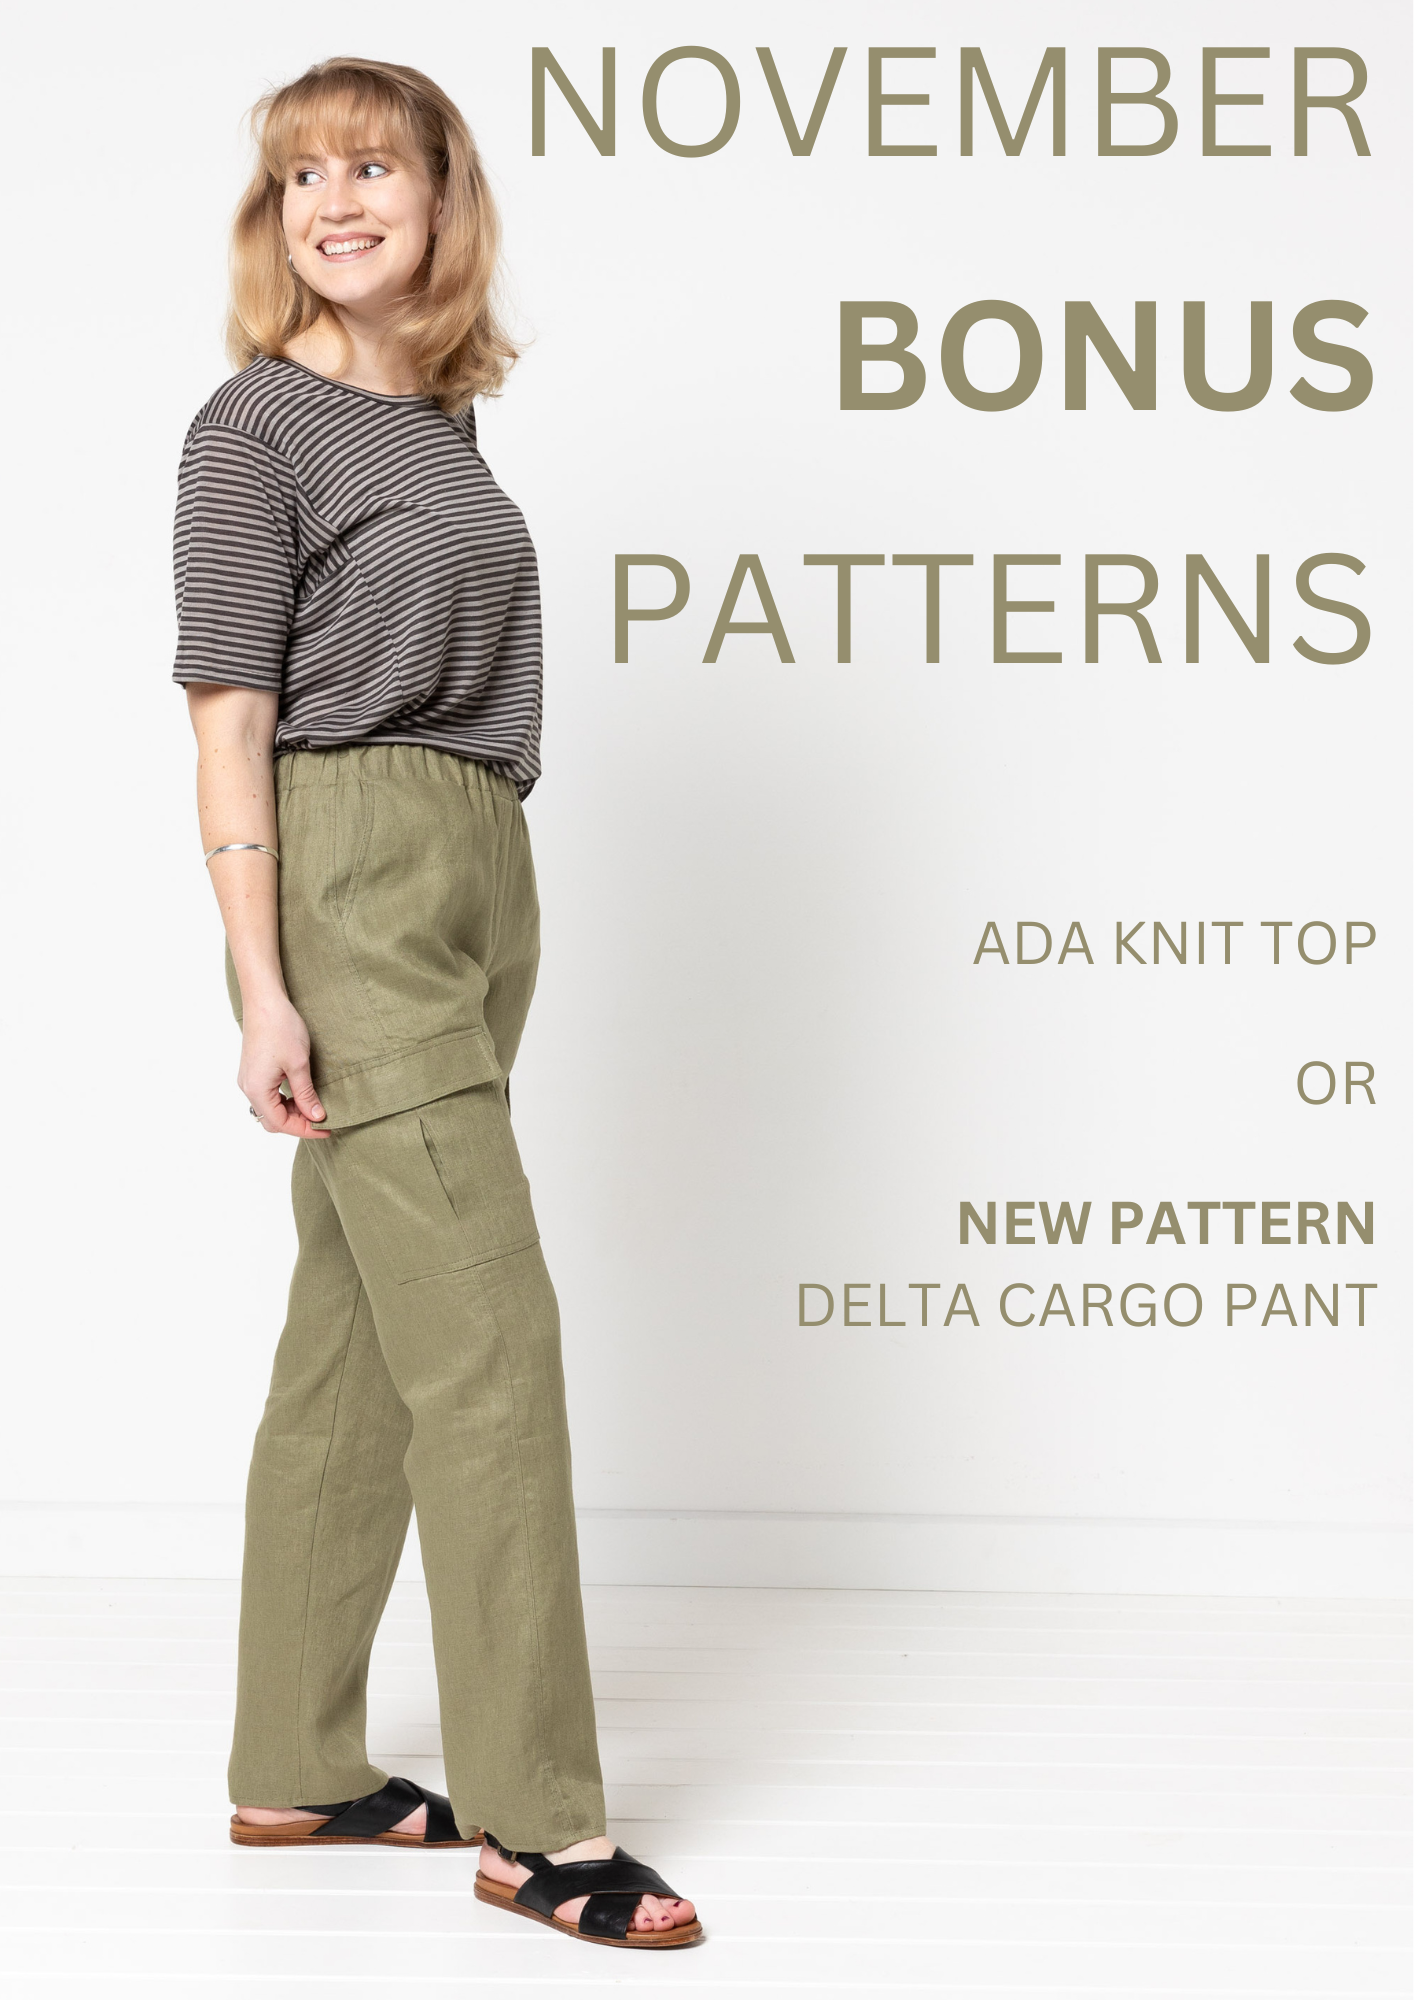 November Bonus Patterns - Ada Knit Top or Delta Cargo Pant 